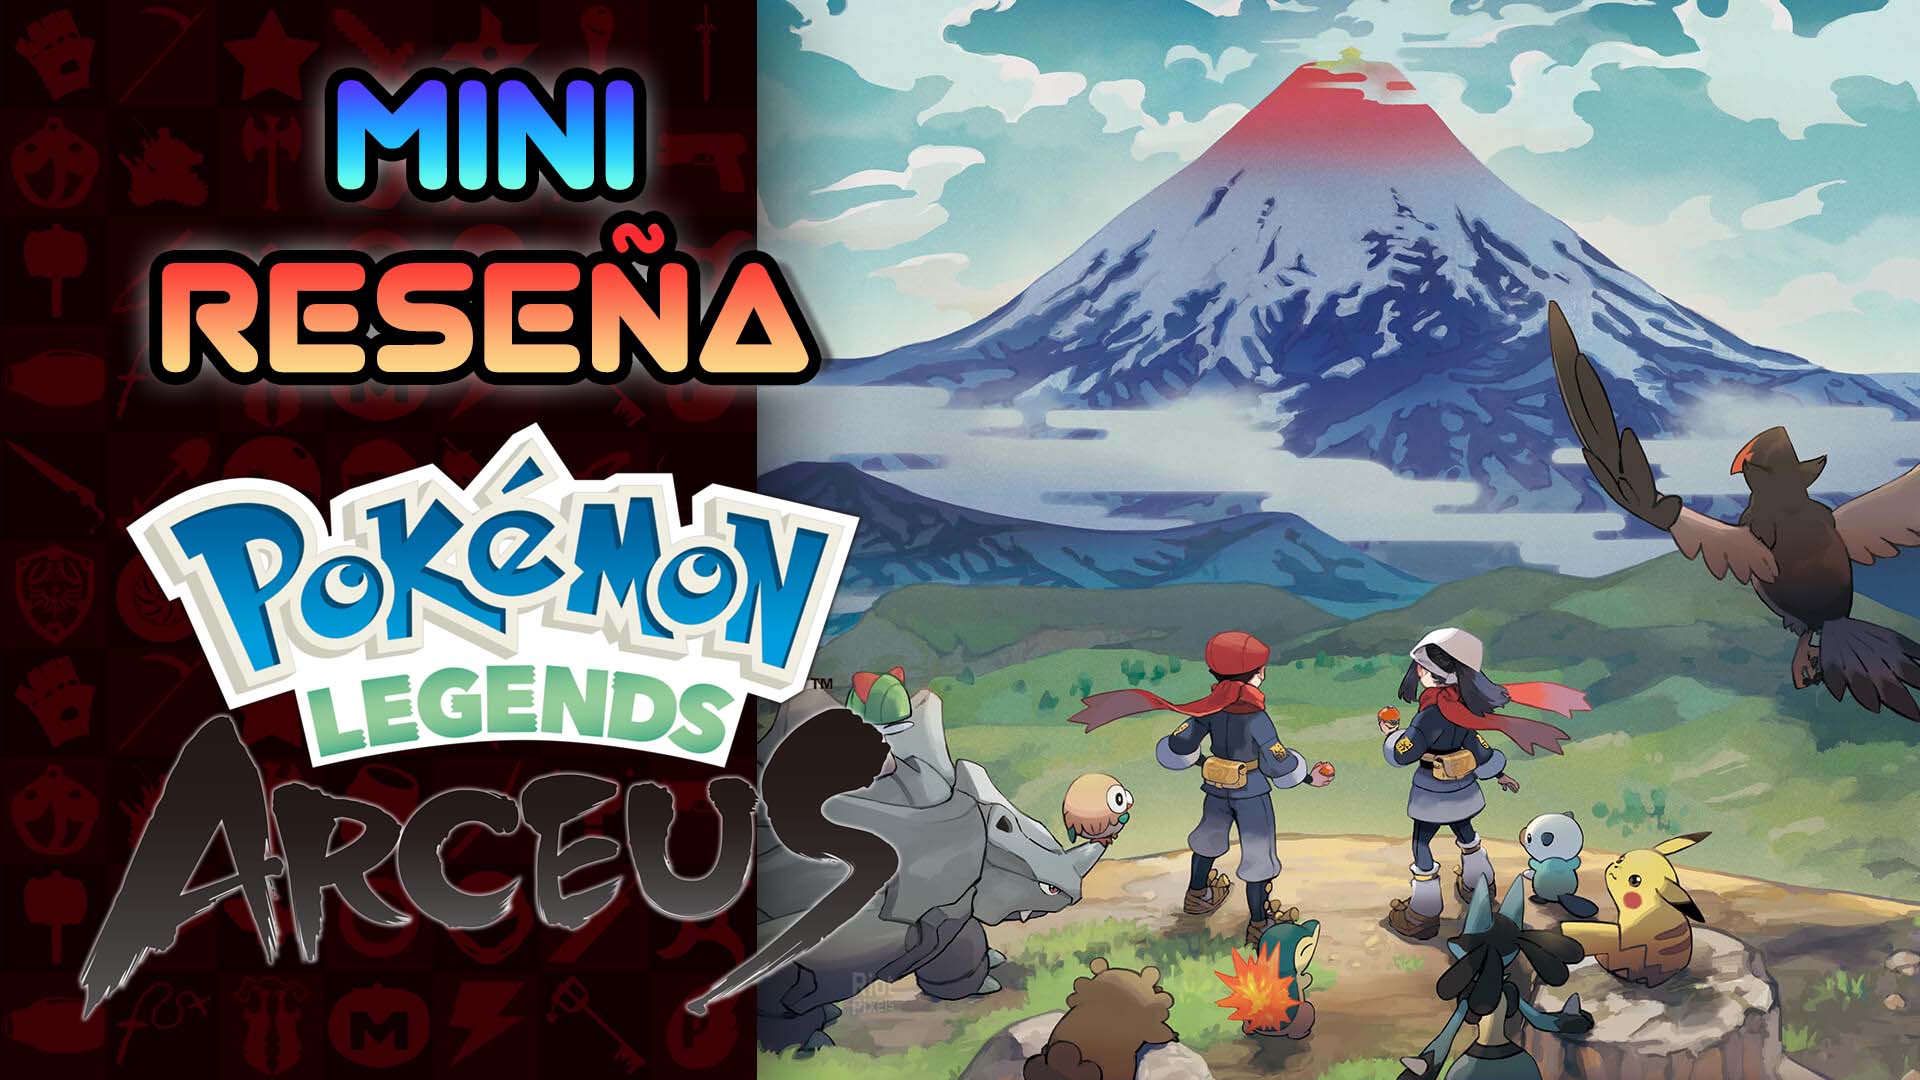 Mini Reseña Pokémon Legends: Arceus – Una mirada… diferente al universo Pokémon